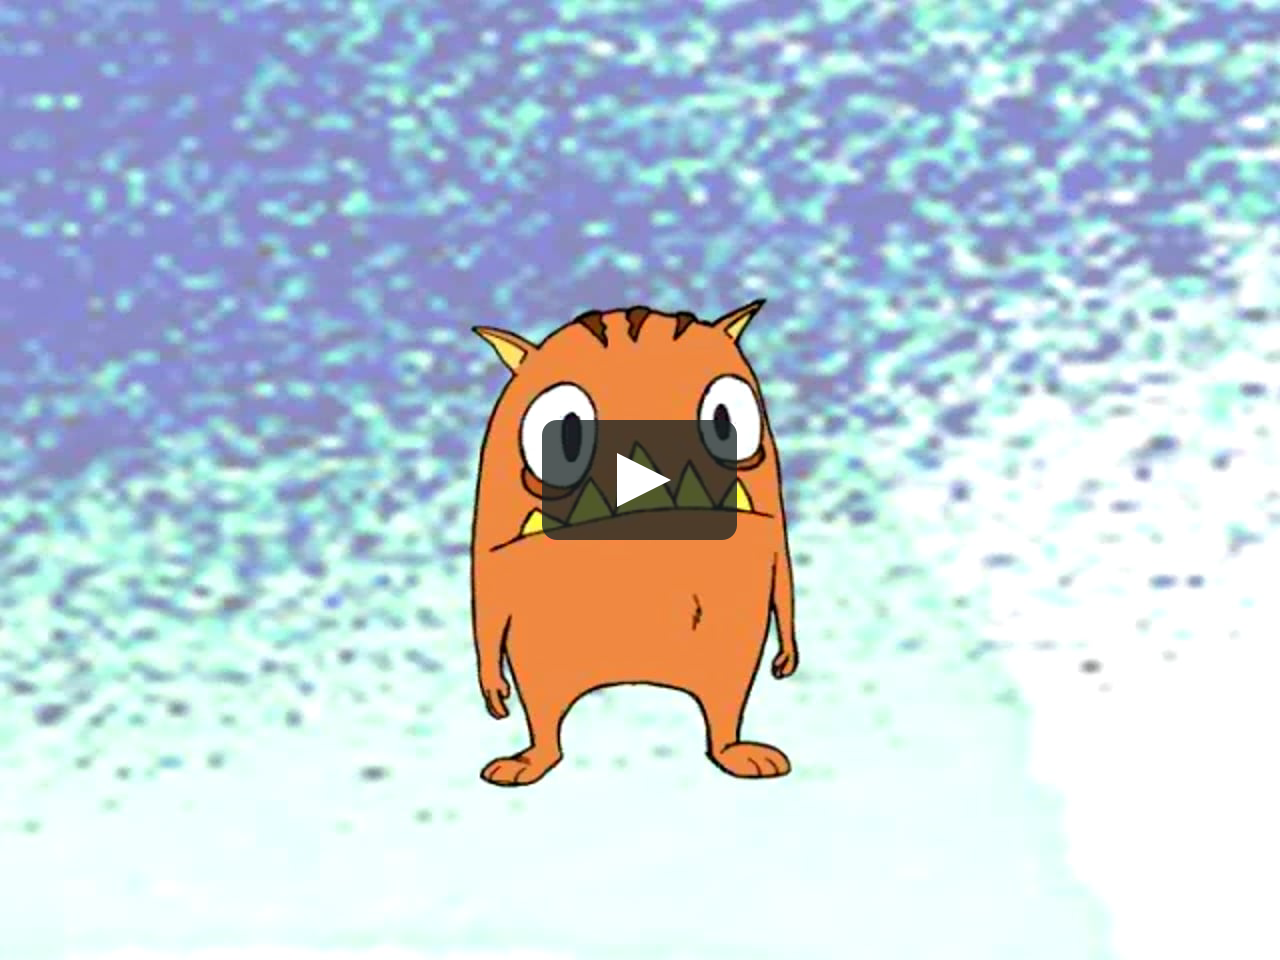 Catscratch Pitch Animation by Doug TenNapel.